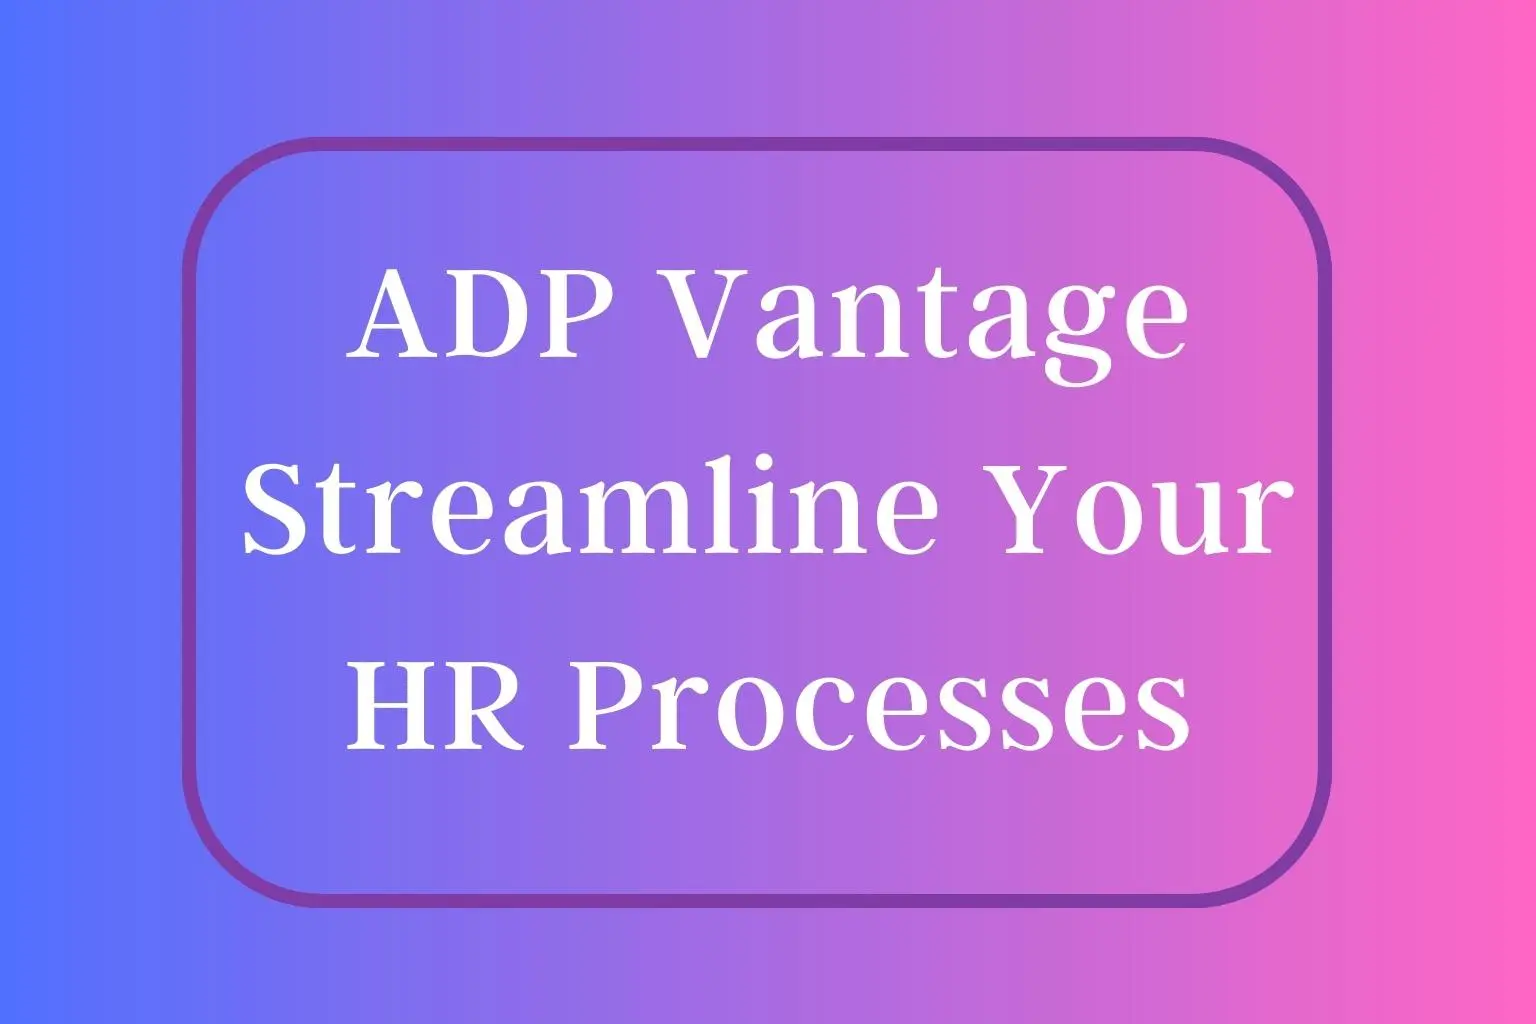 ADP Vantage Streamline Your HR Processes